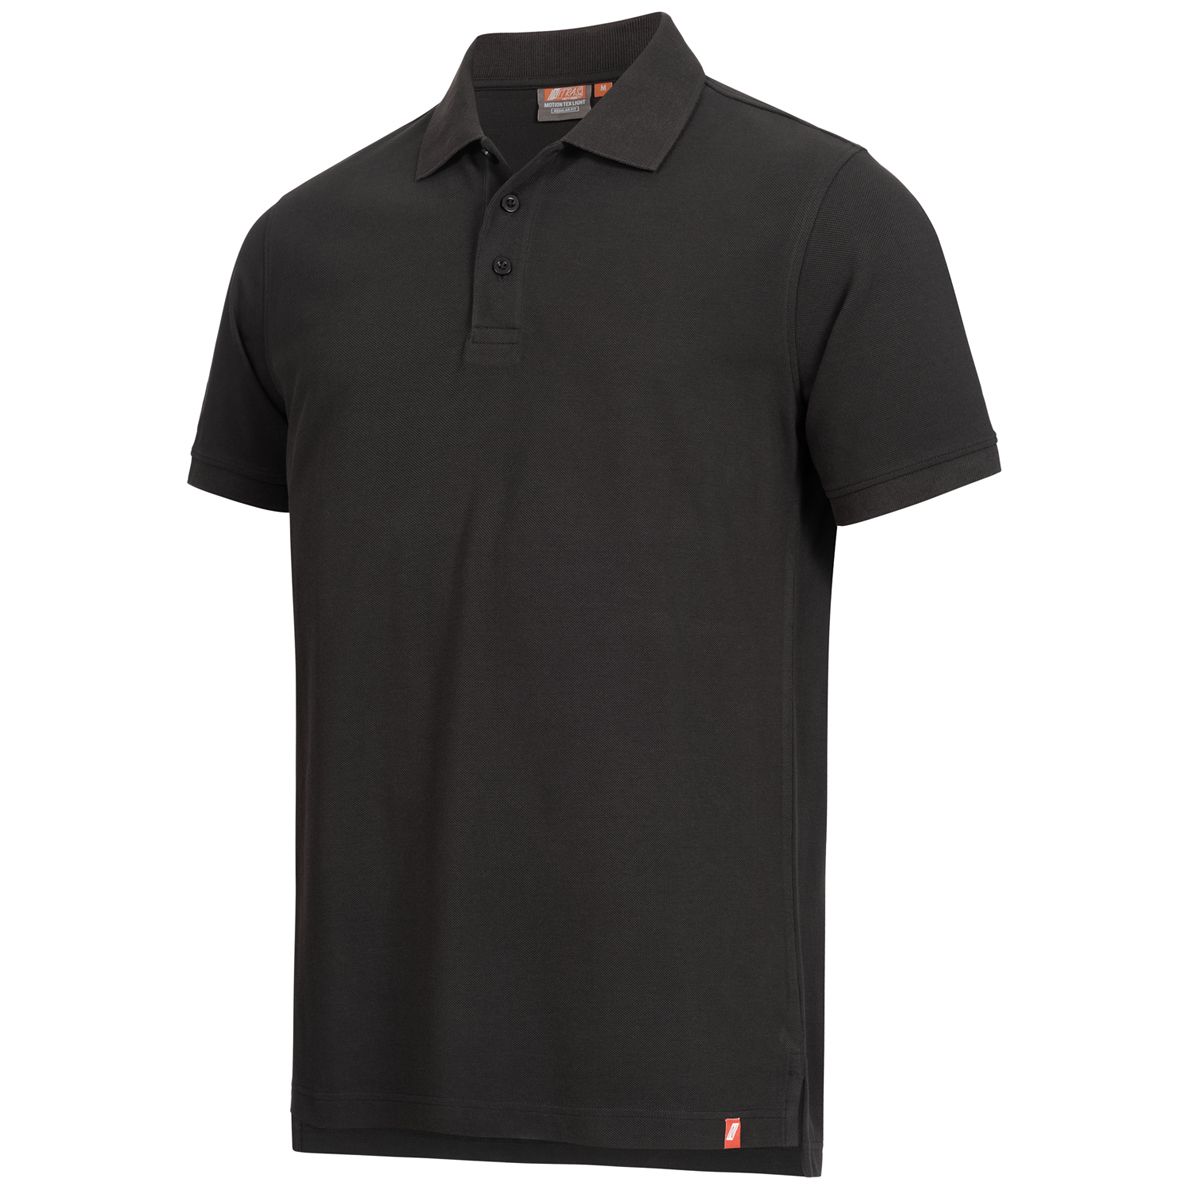 SALE: NITRAS MOTION TEX LIGHT work T-shirt - 100% cotton short sleeve polo shirt - for work - Black - S